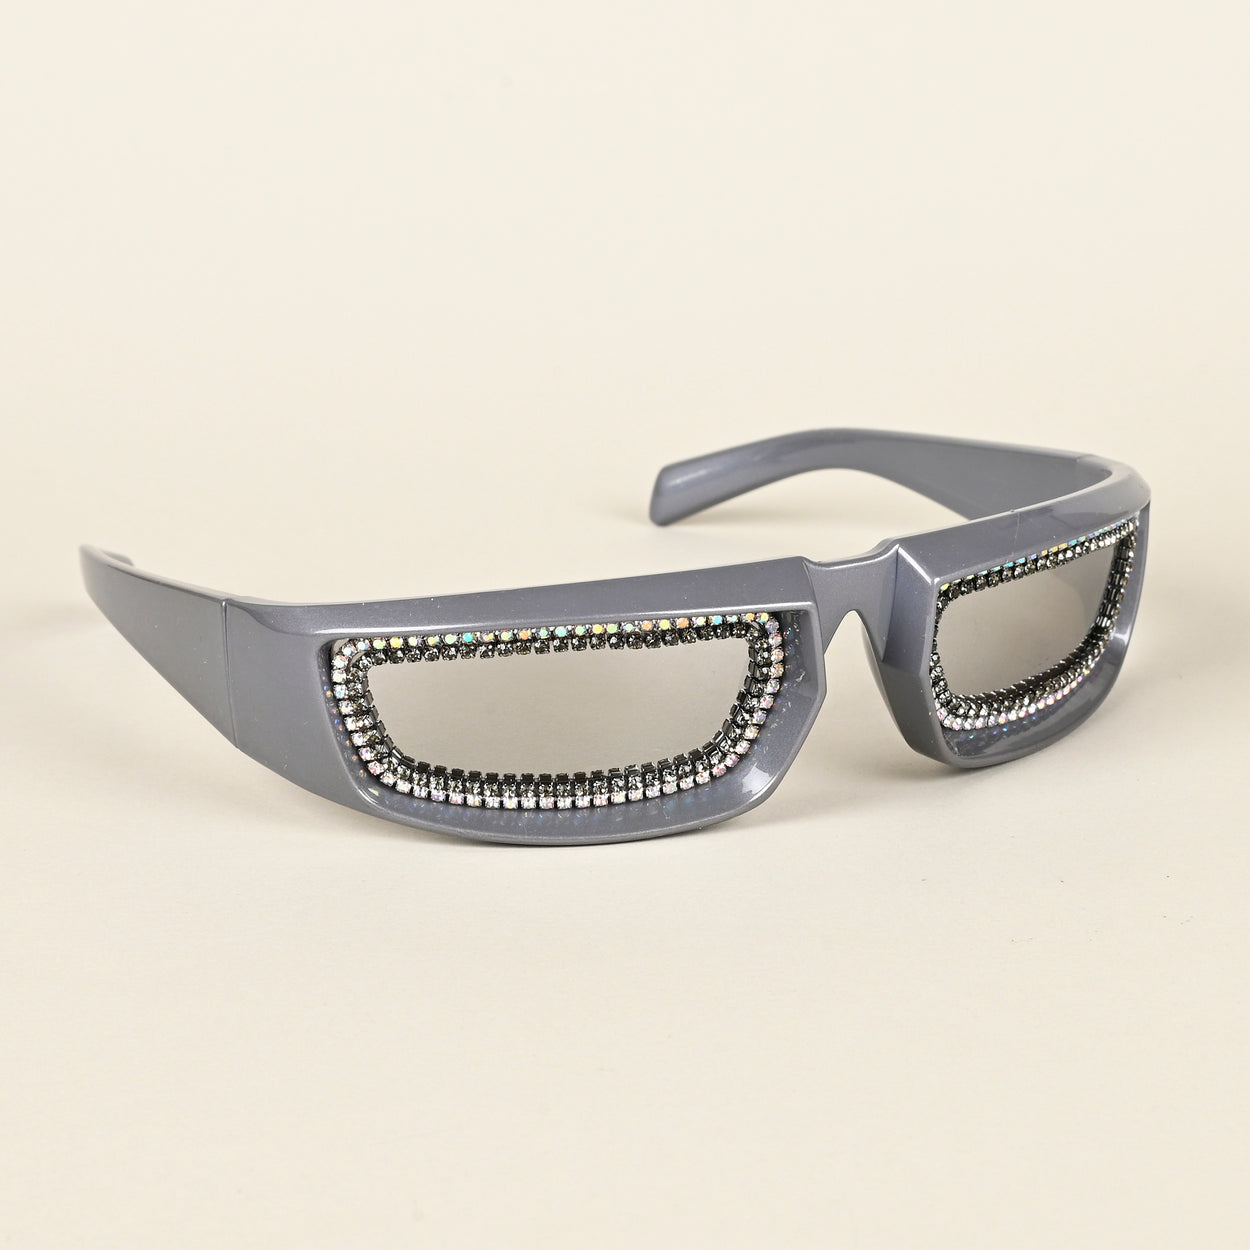 Voyage Silver Wrap-Around Sunglasses for Men & Women - MG4354